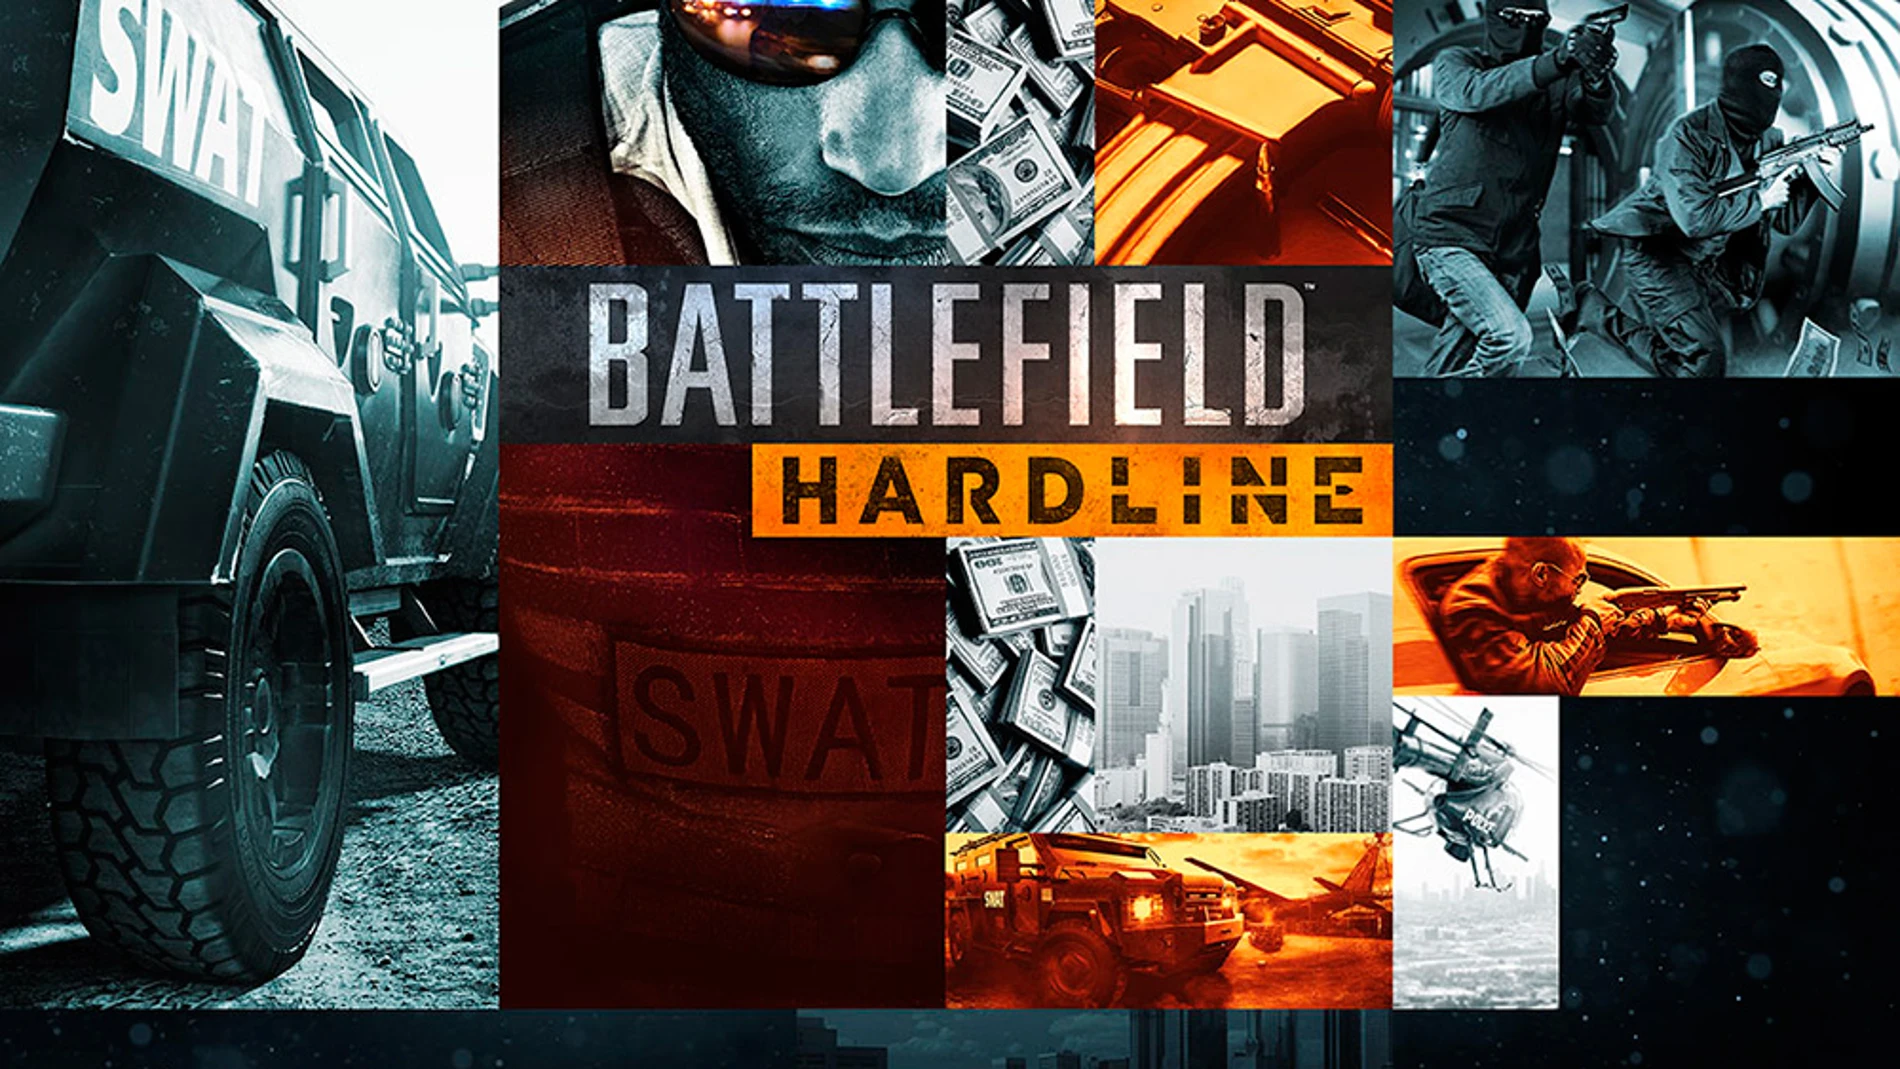 «Battlefield Hardline» estrena diversos materiales